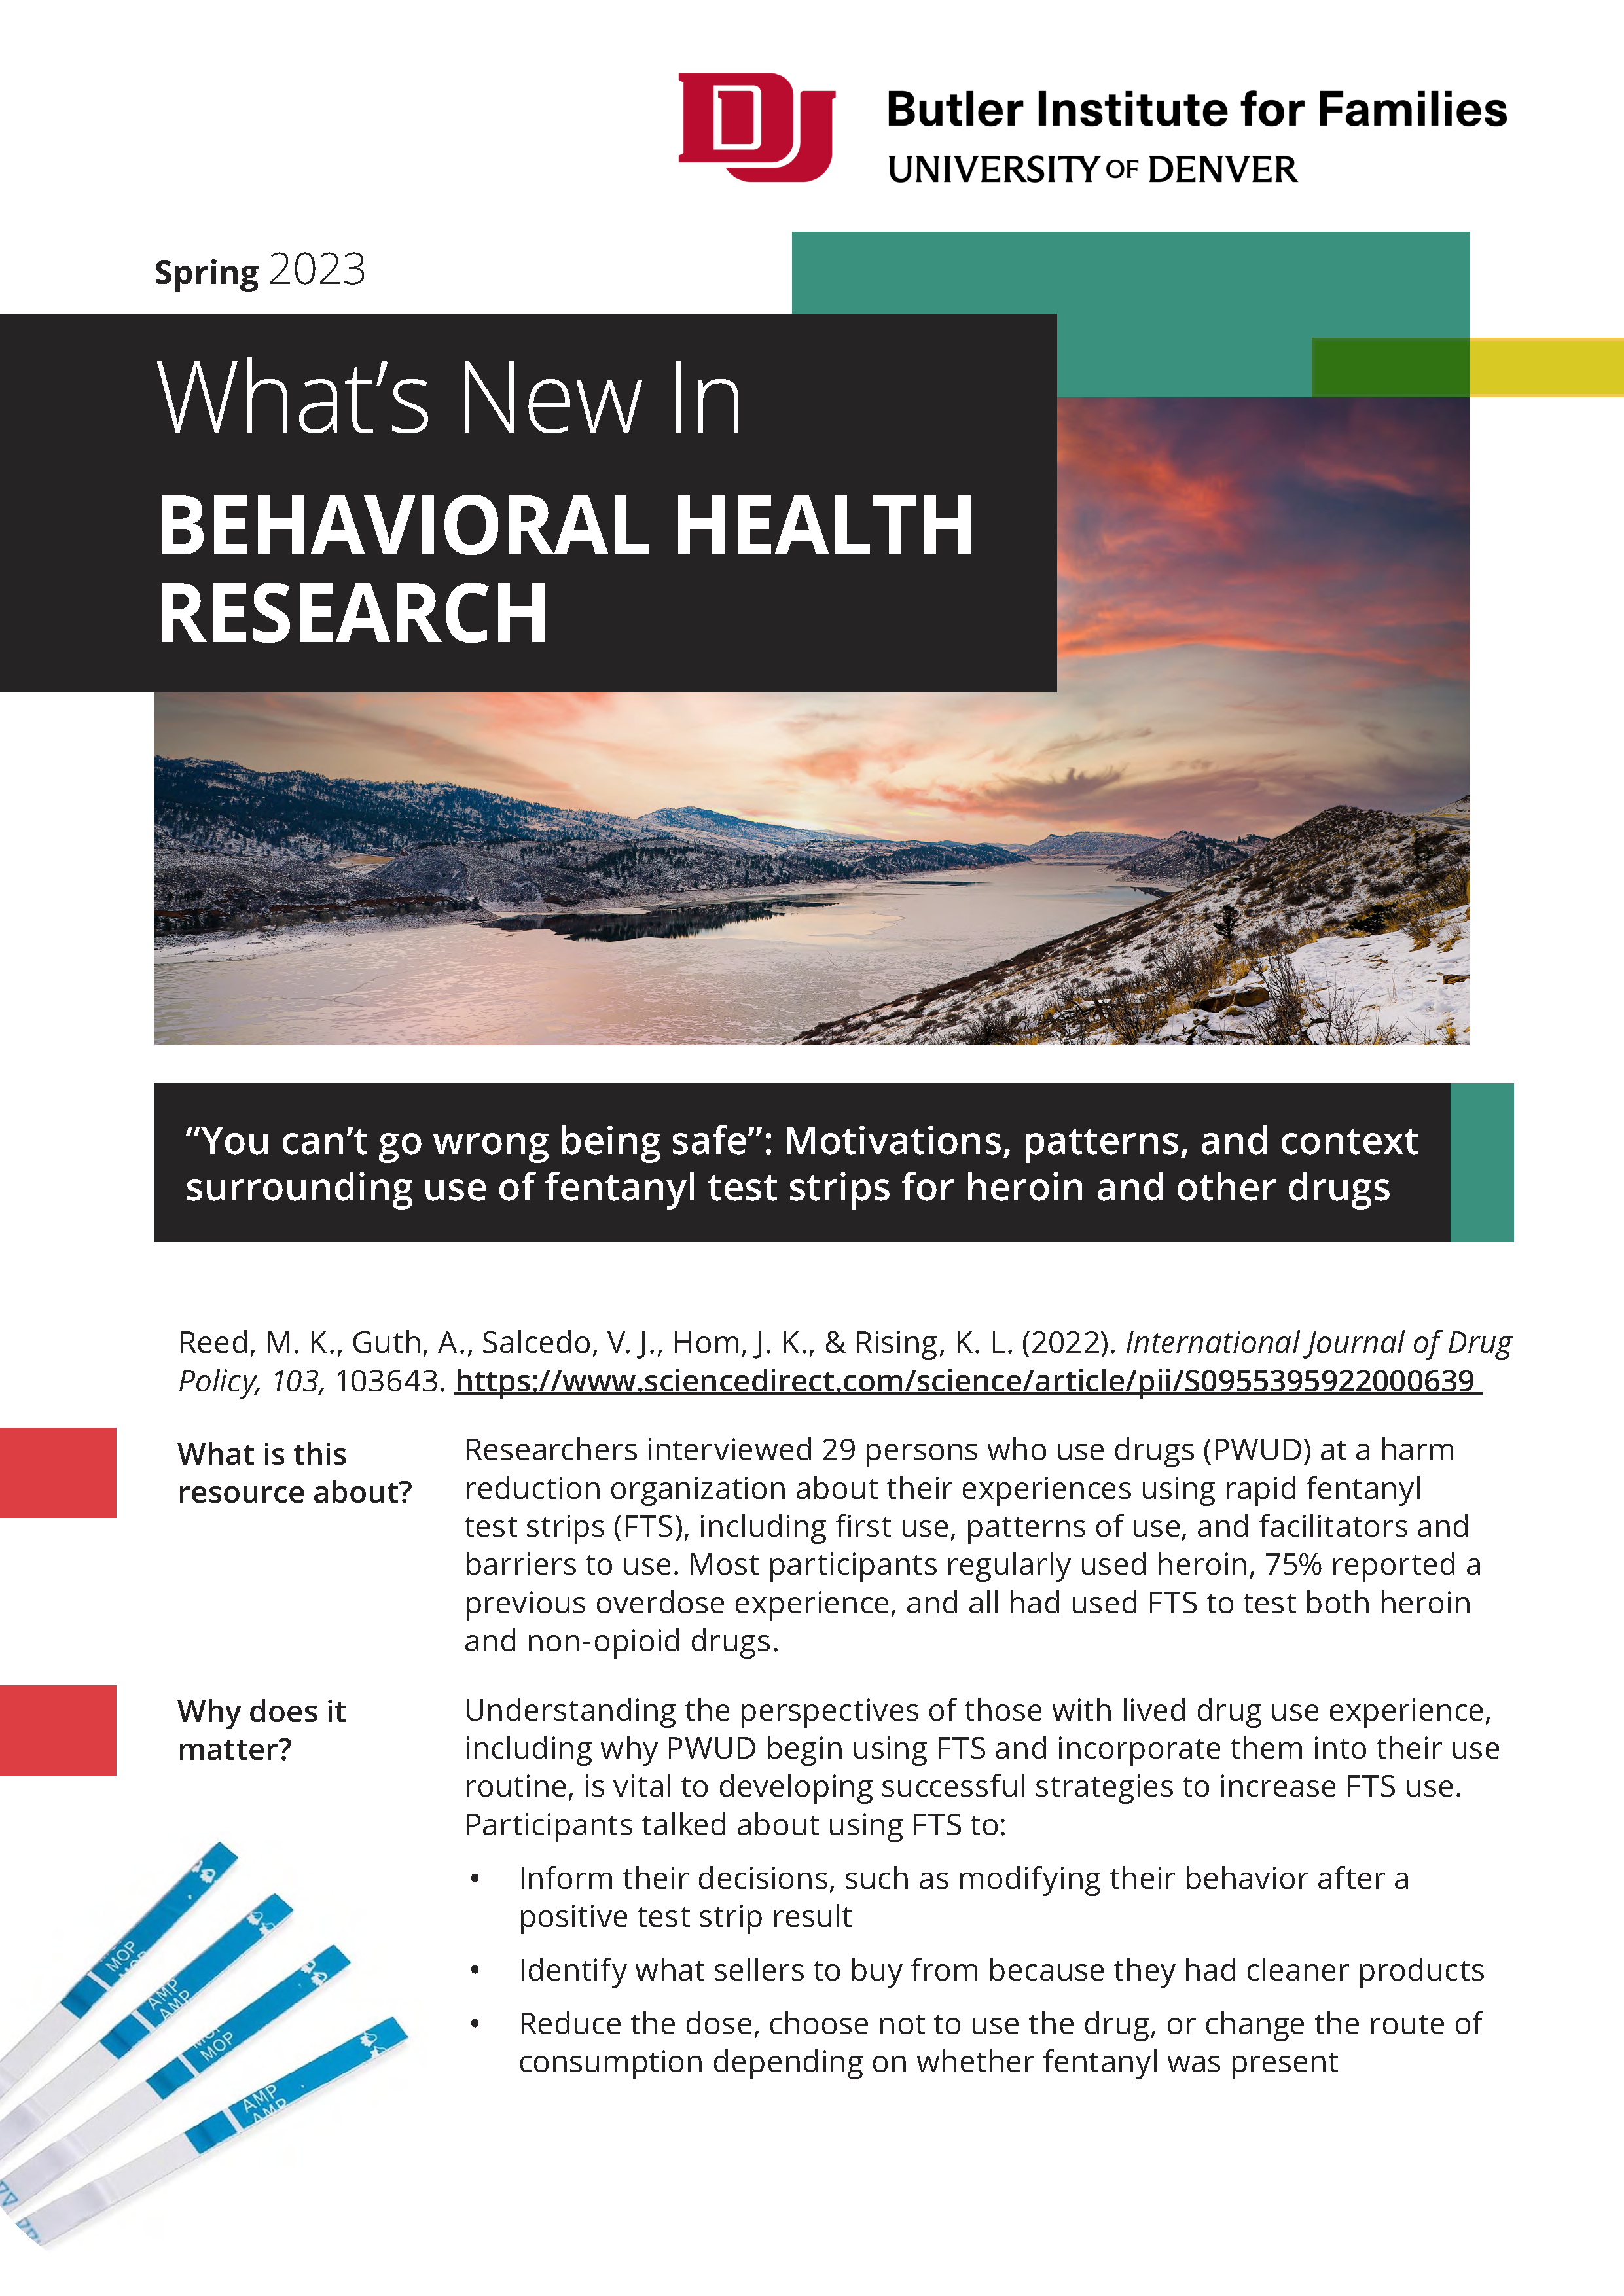 Behavioral Health Research - Spring 2023 